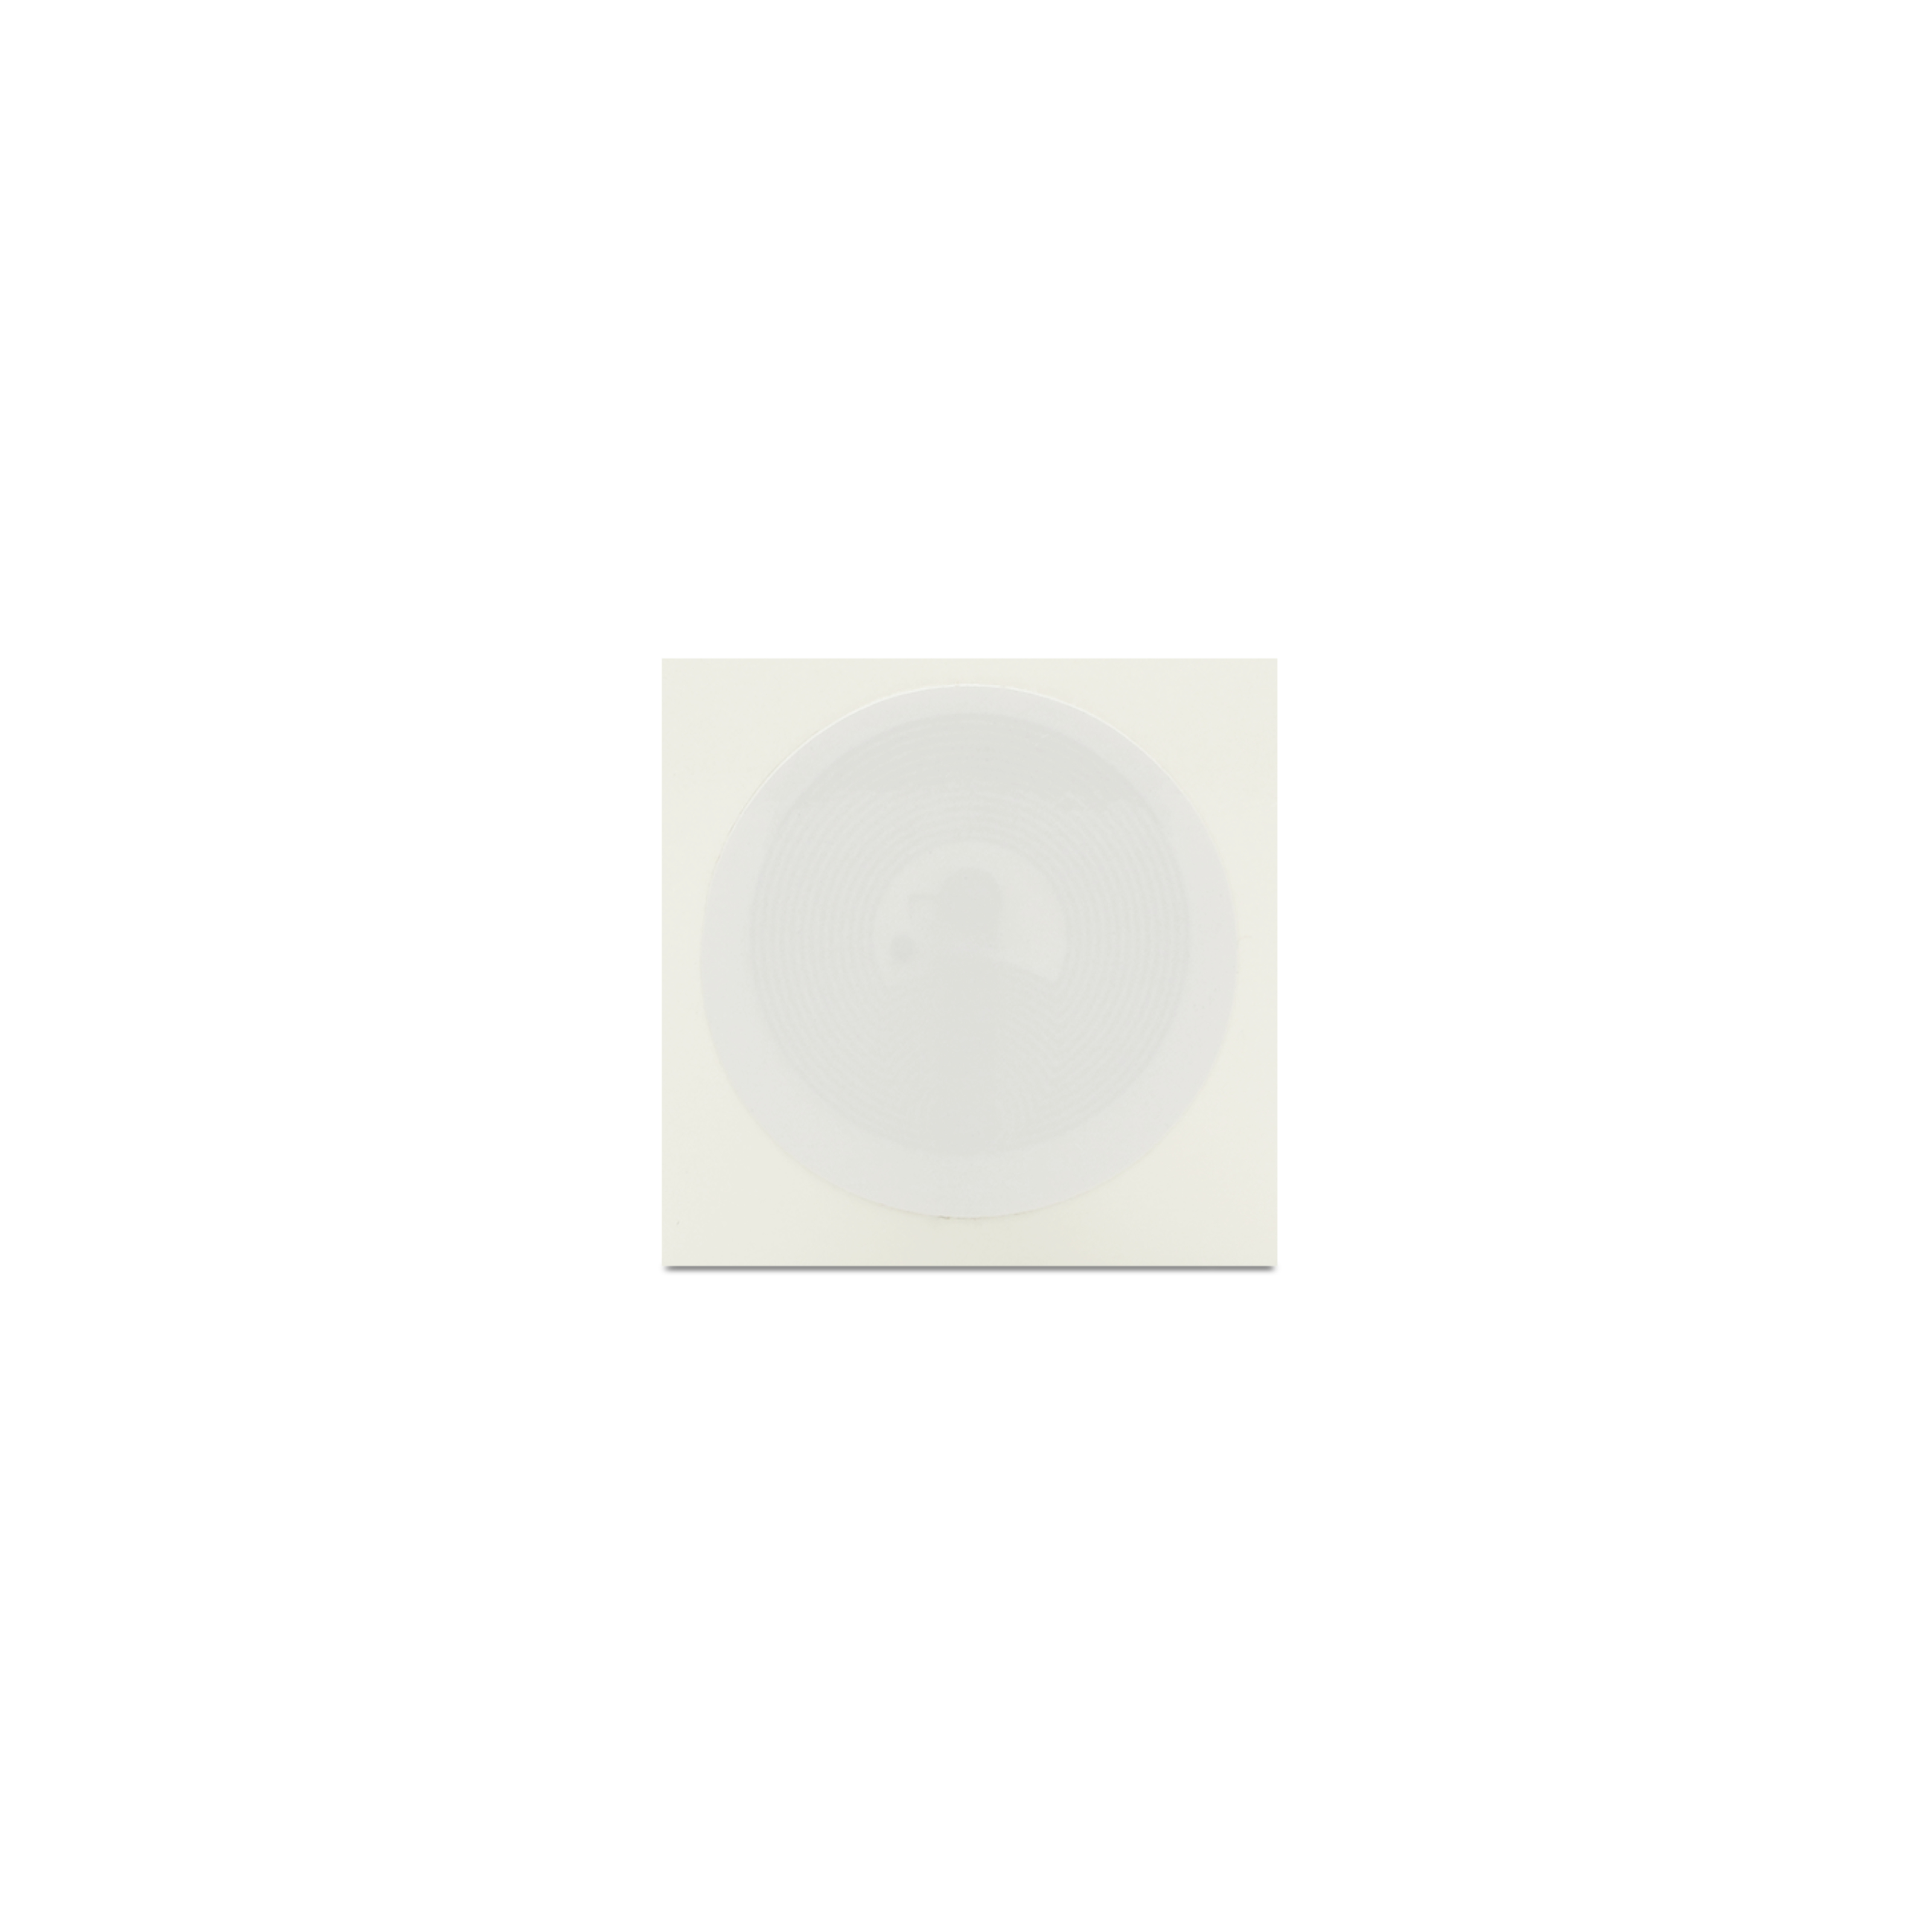 NFC Sticker PET - 22 mm - NTAG216 - 924 Byte - white